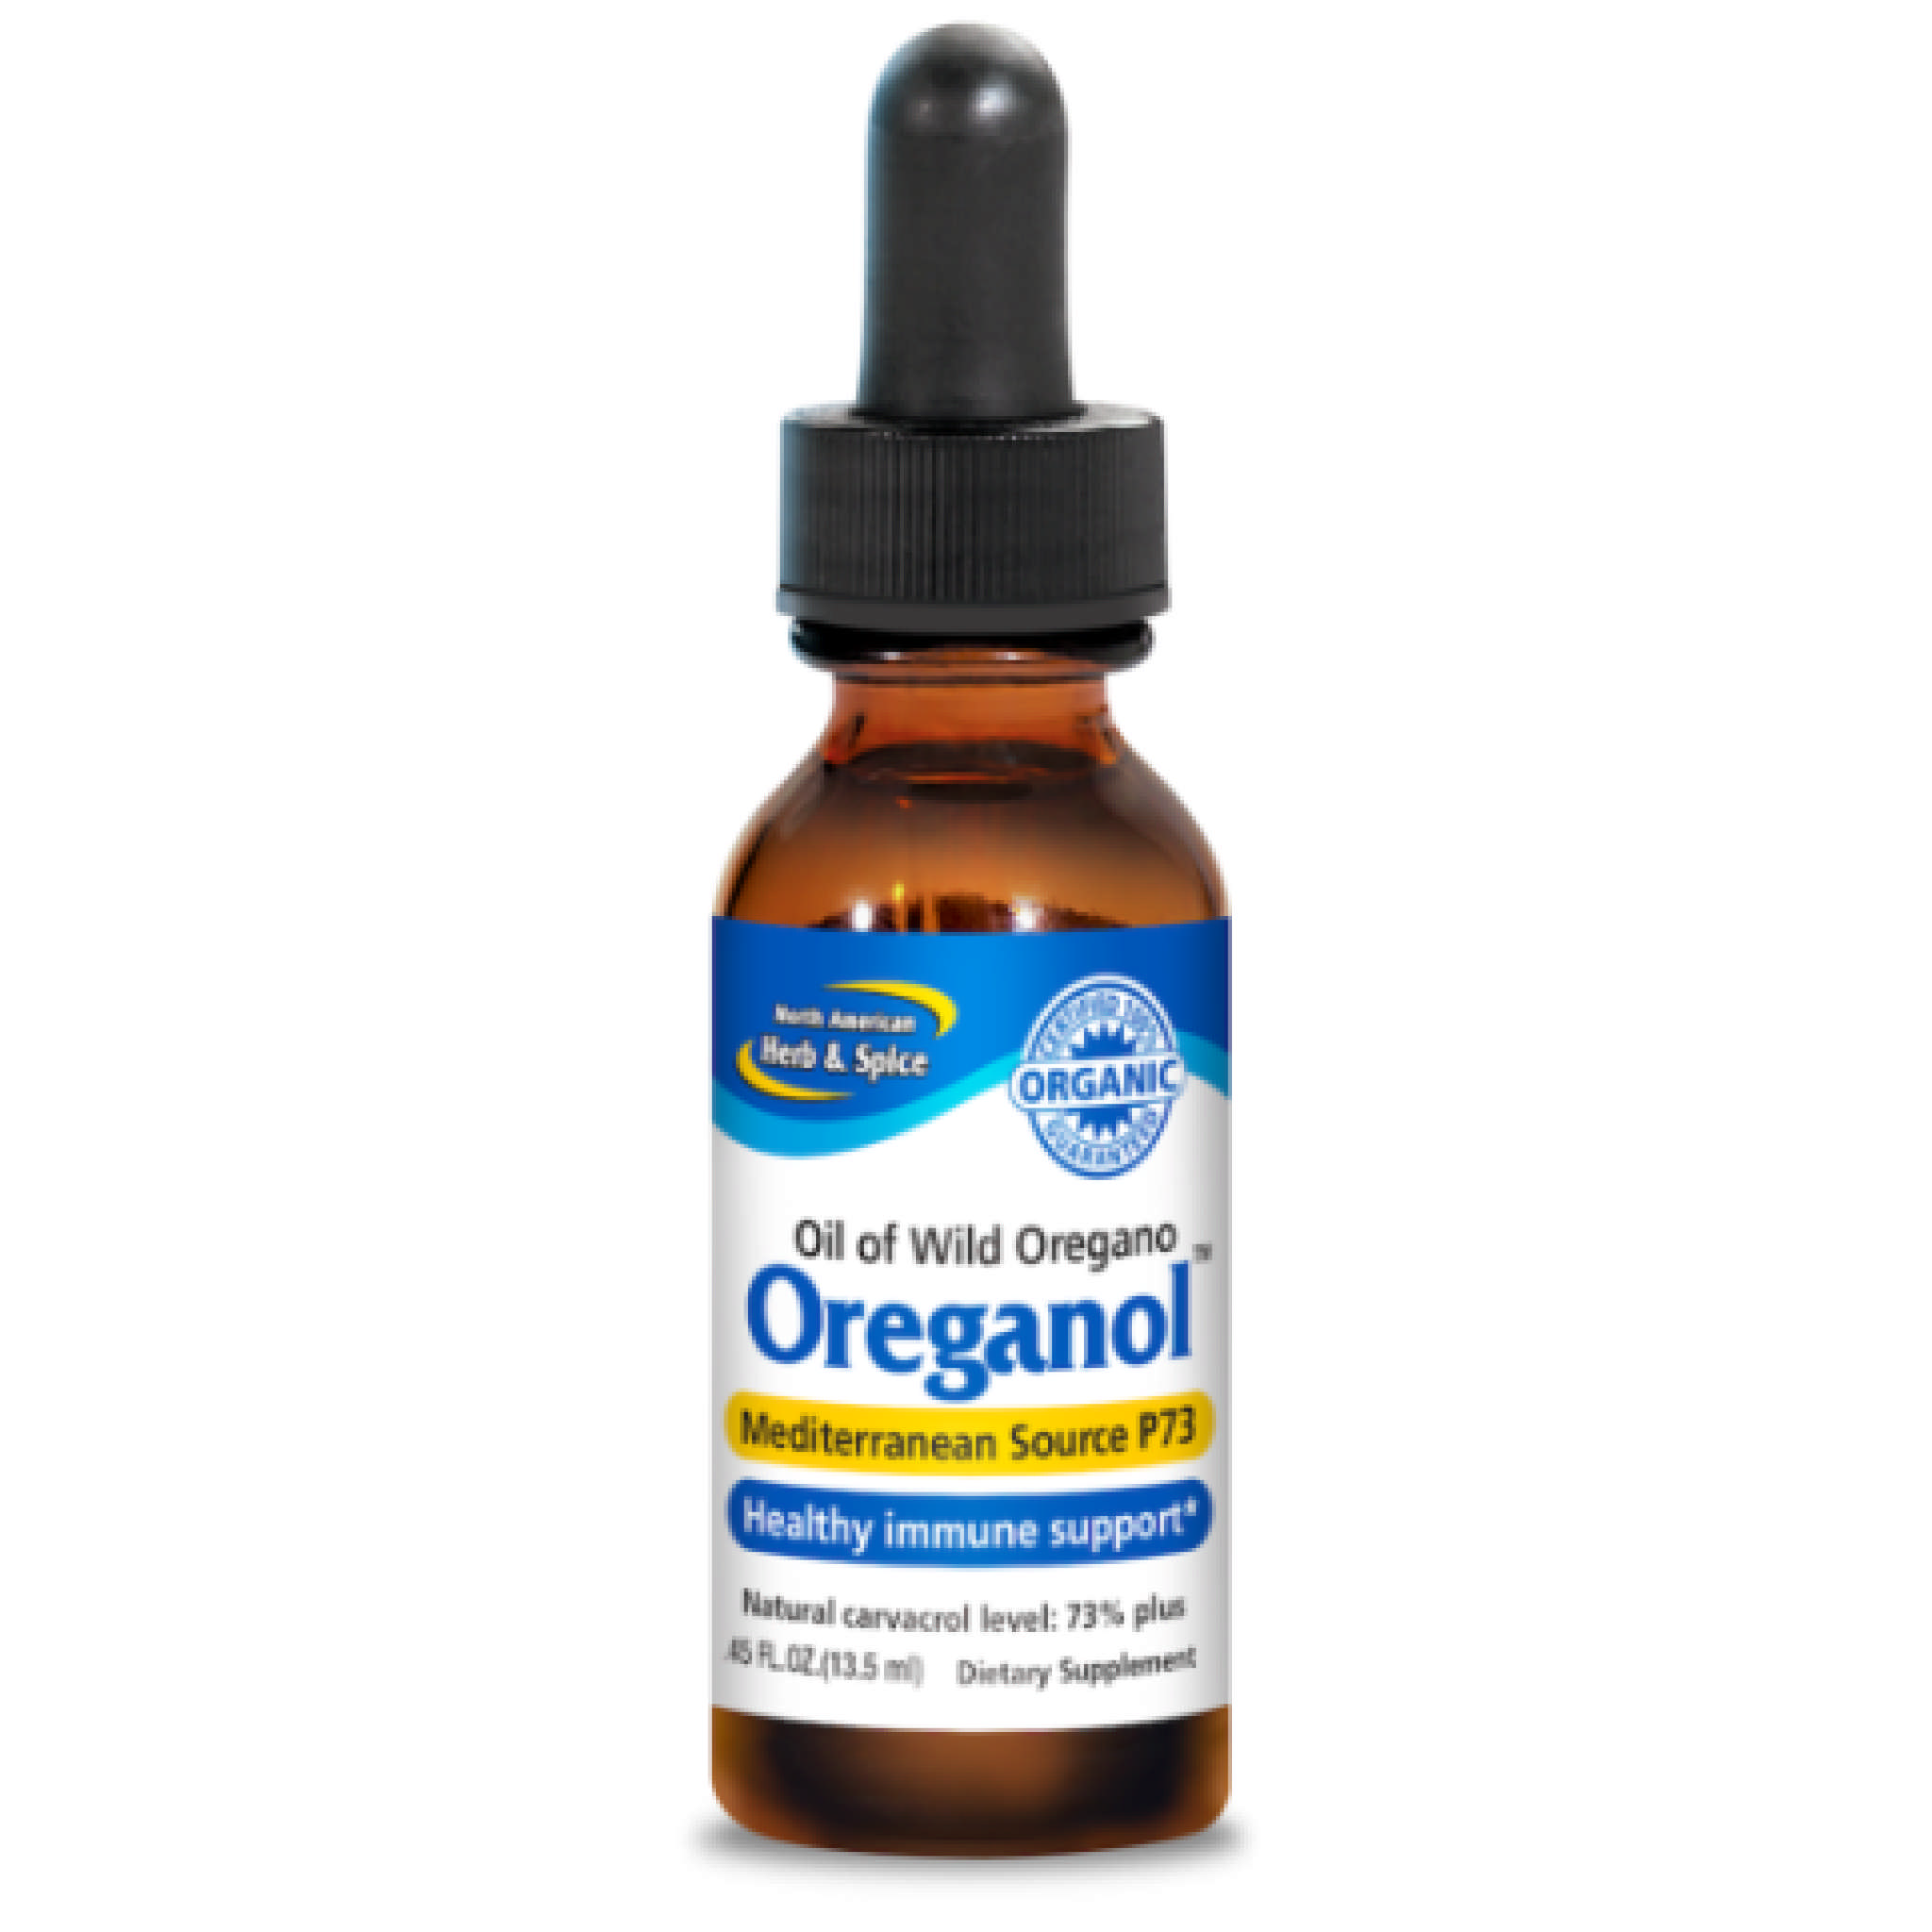 North American Herb - Oil Of Oregano Super Strength